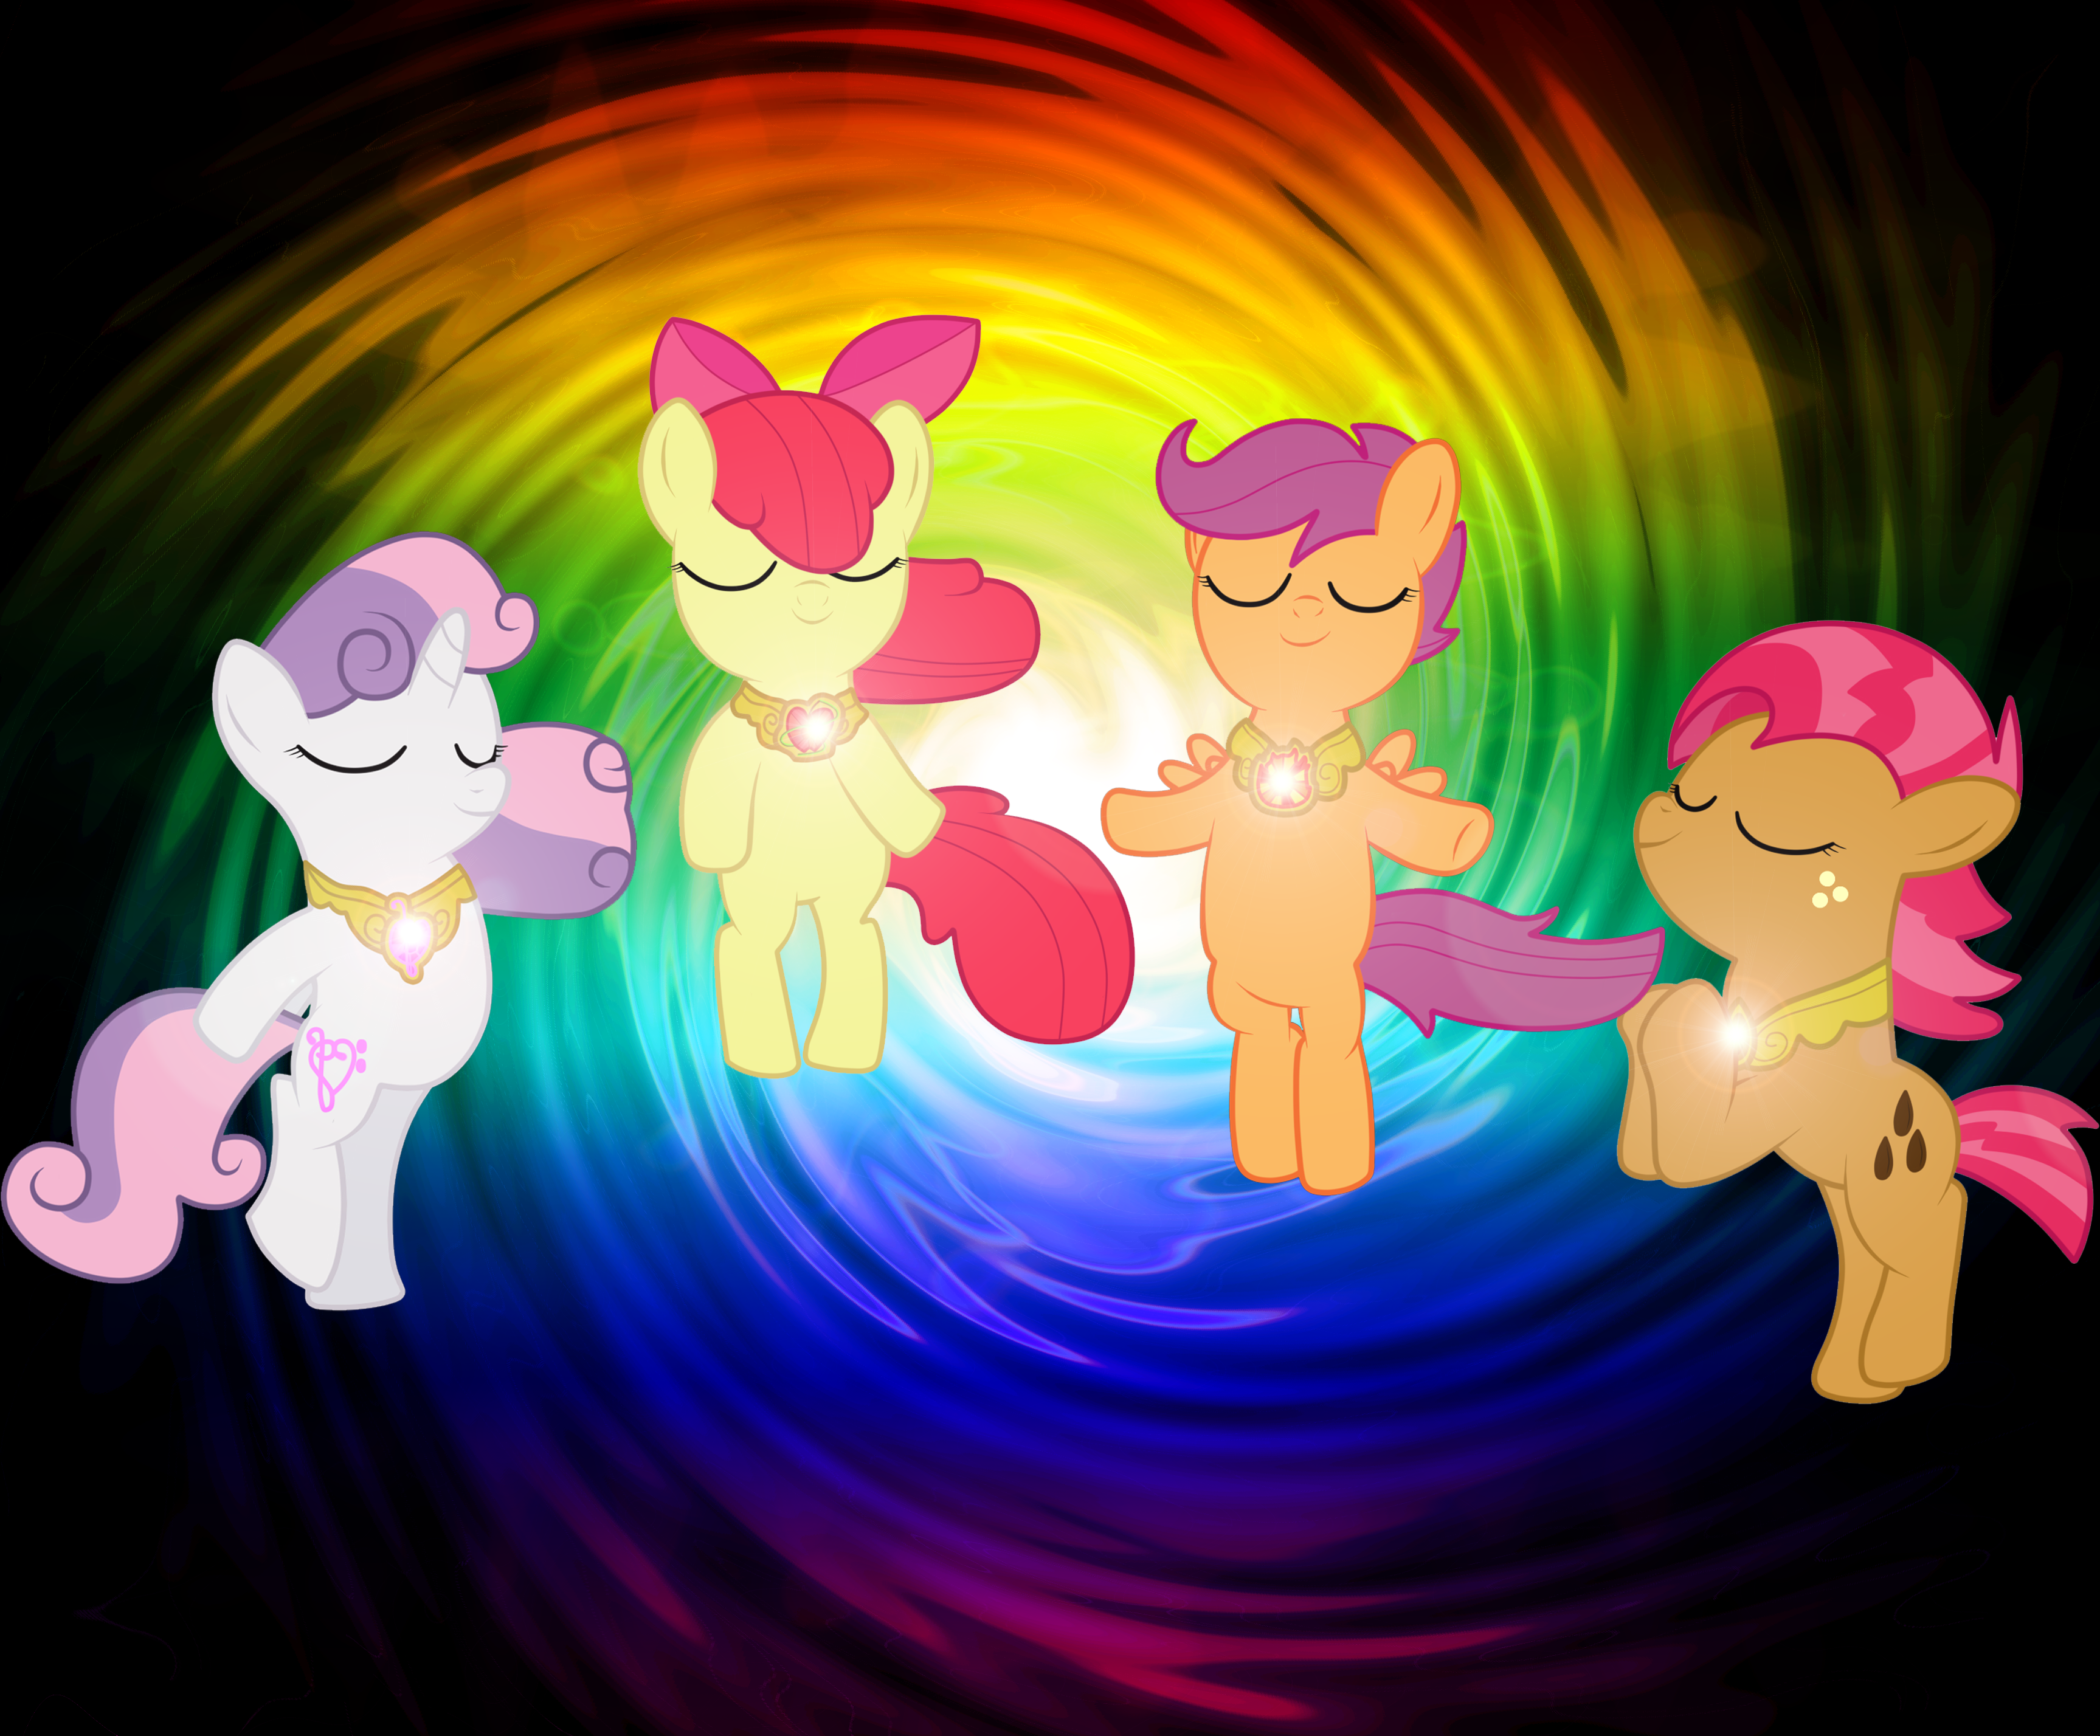 Hidden Elements of Harmony. My Little Pony: Friendship is Magic